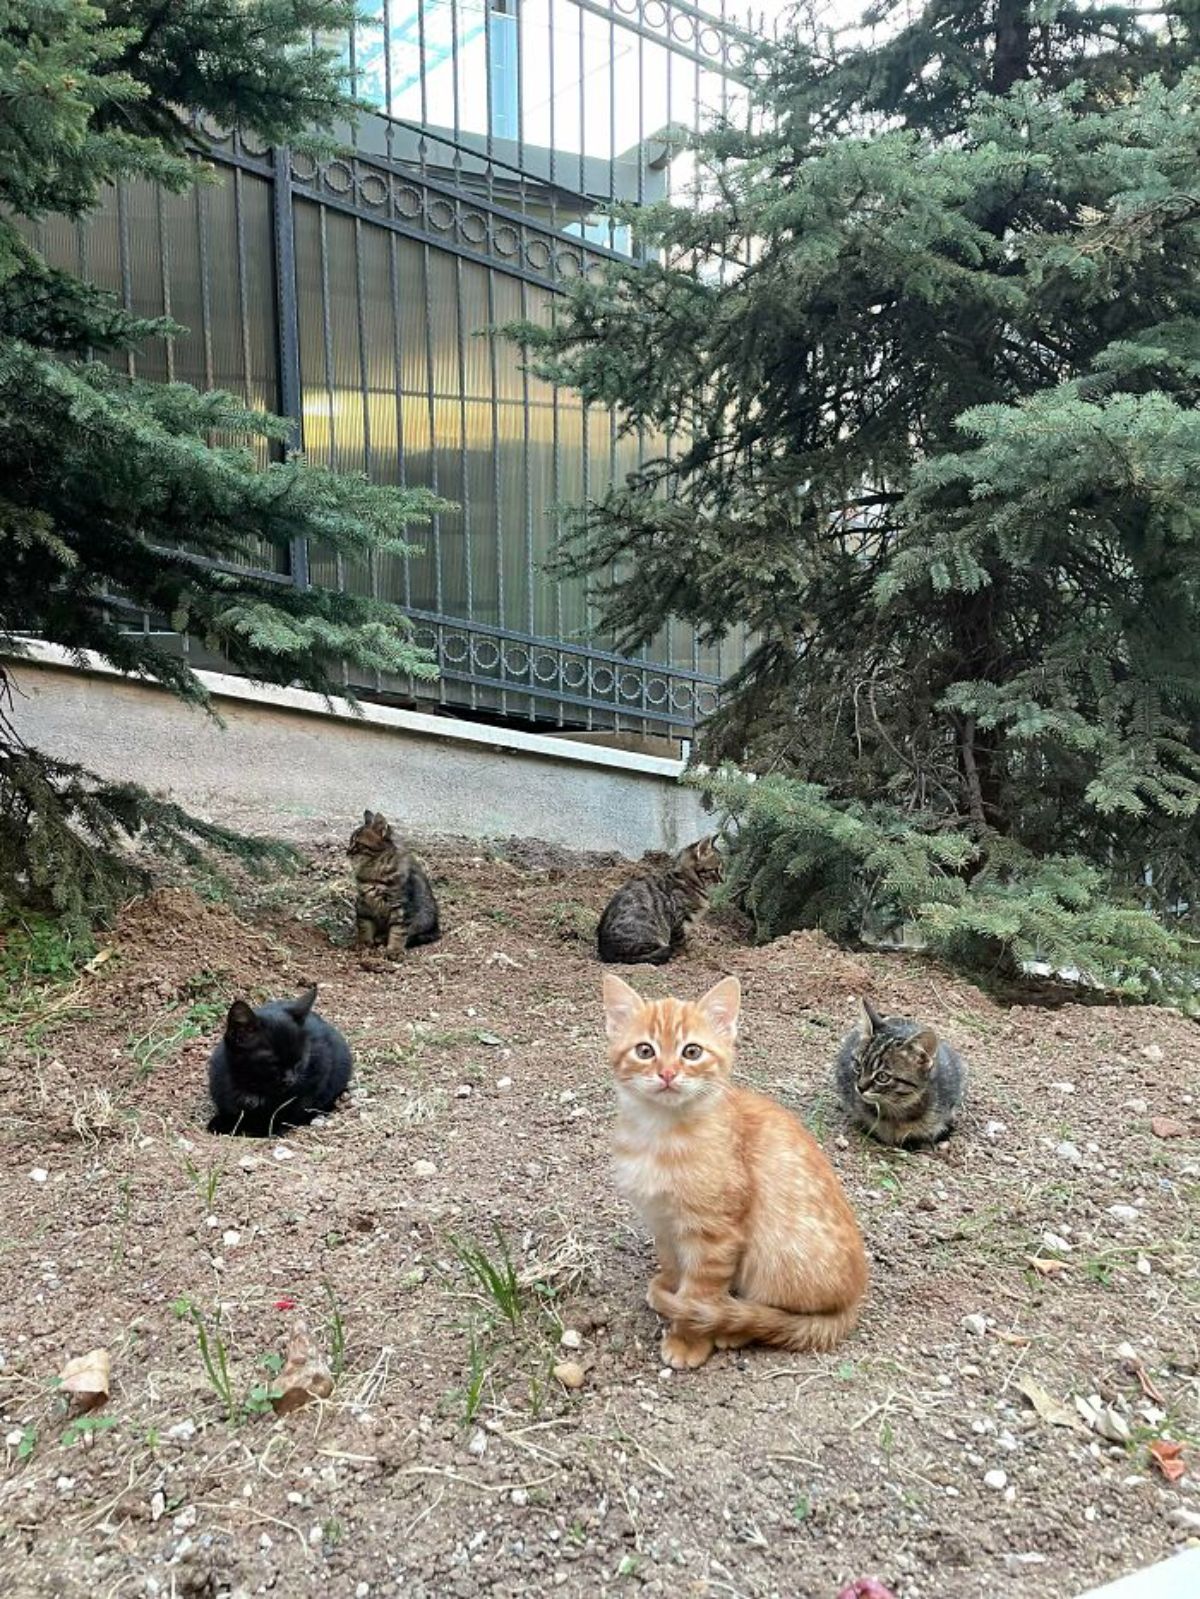 5 kittens sitting in a circle with 1 orange kitten 1 black kitten and 3 grey tabby kittens